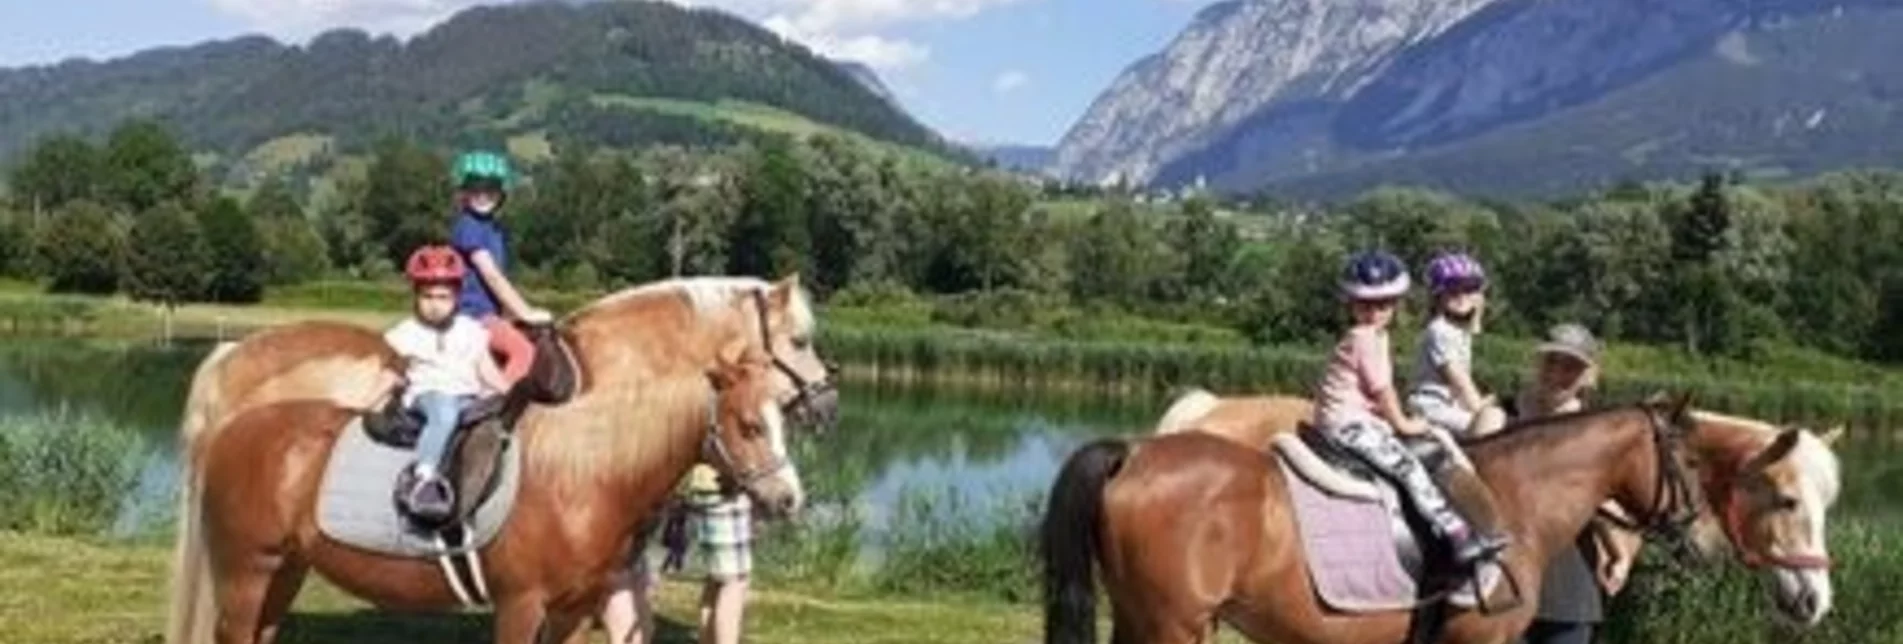 Horse Riding Guided pony hikes, Sulzbacher family - Touren-Impression #1